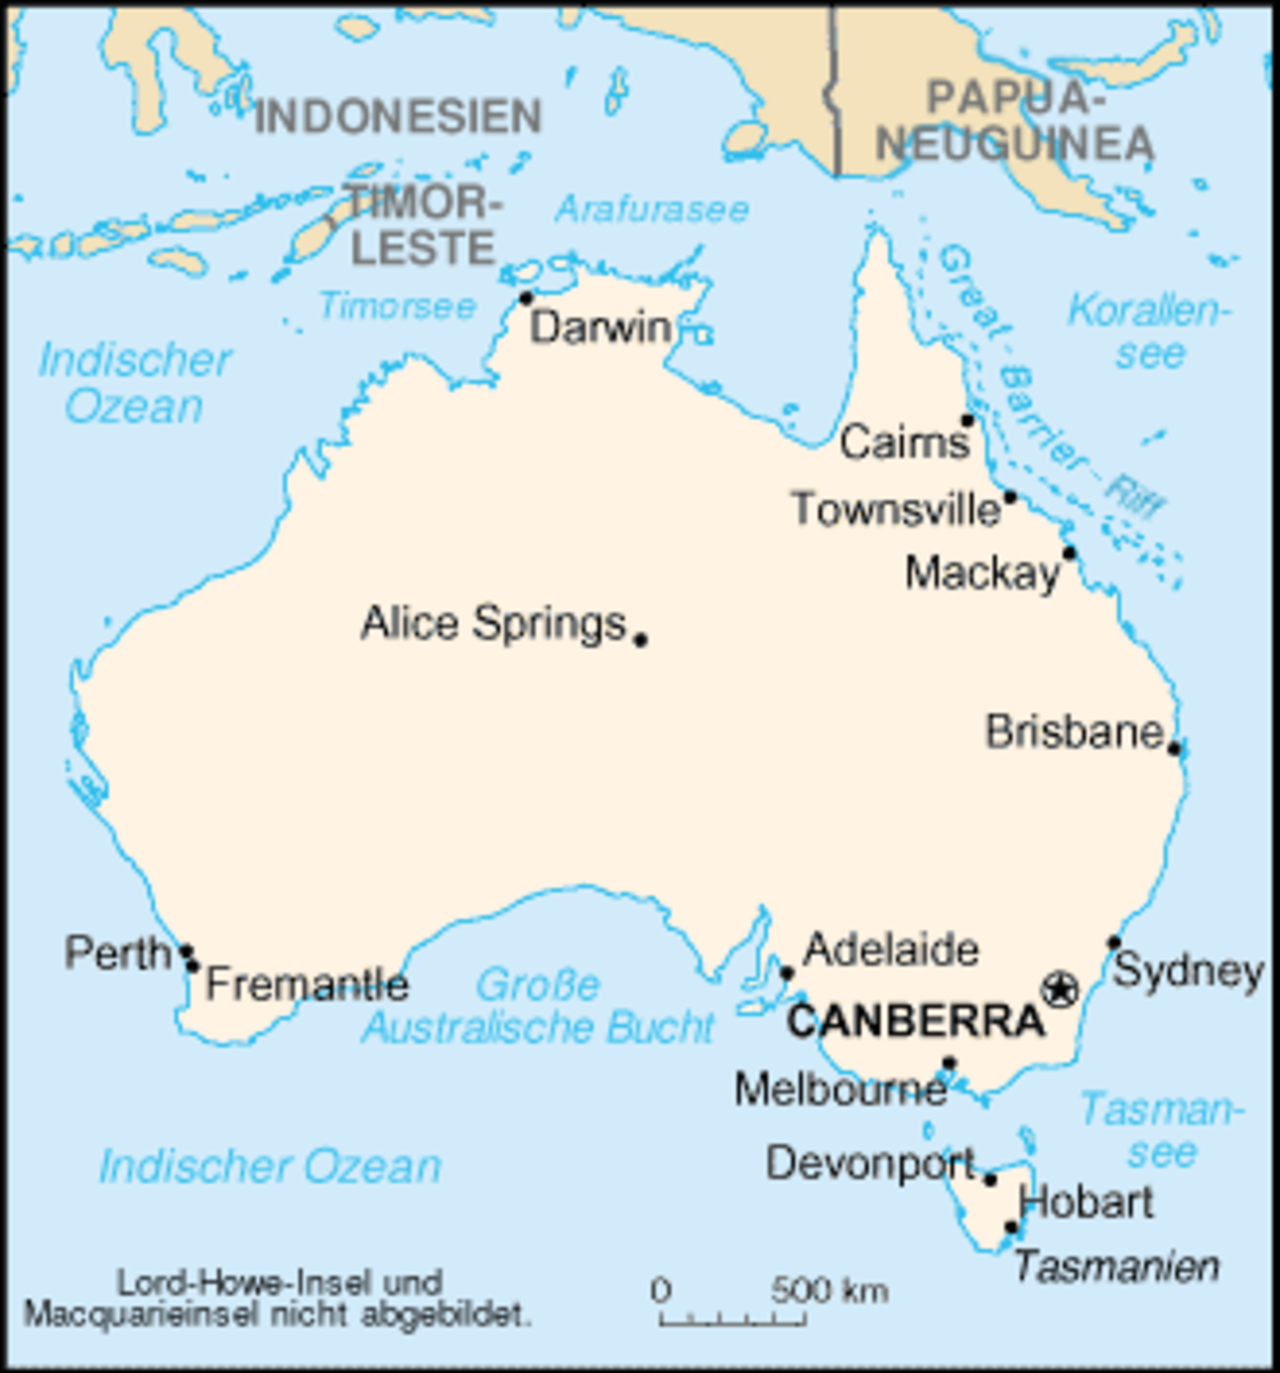 Тиморское море на карте Австралии. Моря заливы проливы Австралии на карте. Моря океаны проливы заливы Австралии на карте. Моря омывающие Австралию на карте. Океан омывающий австралию с запада